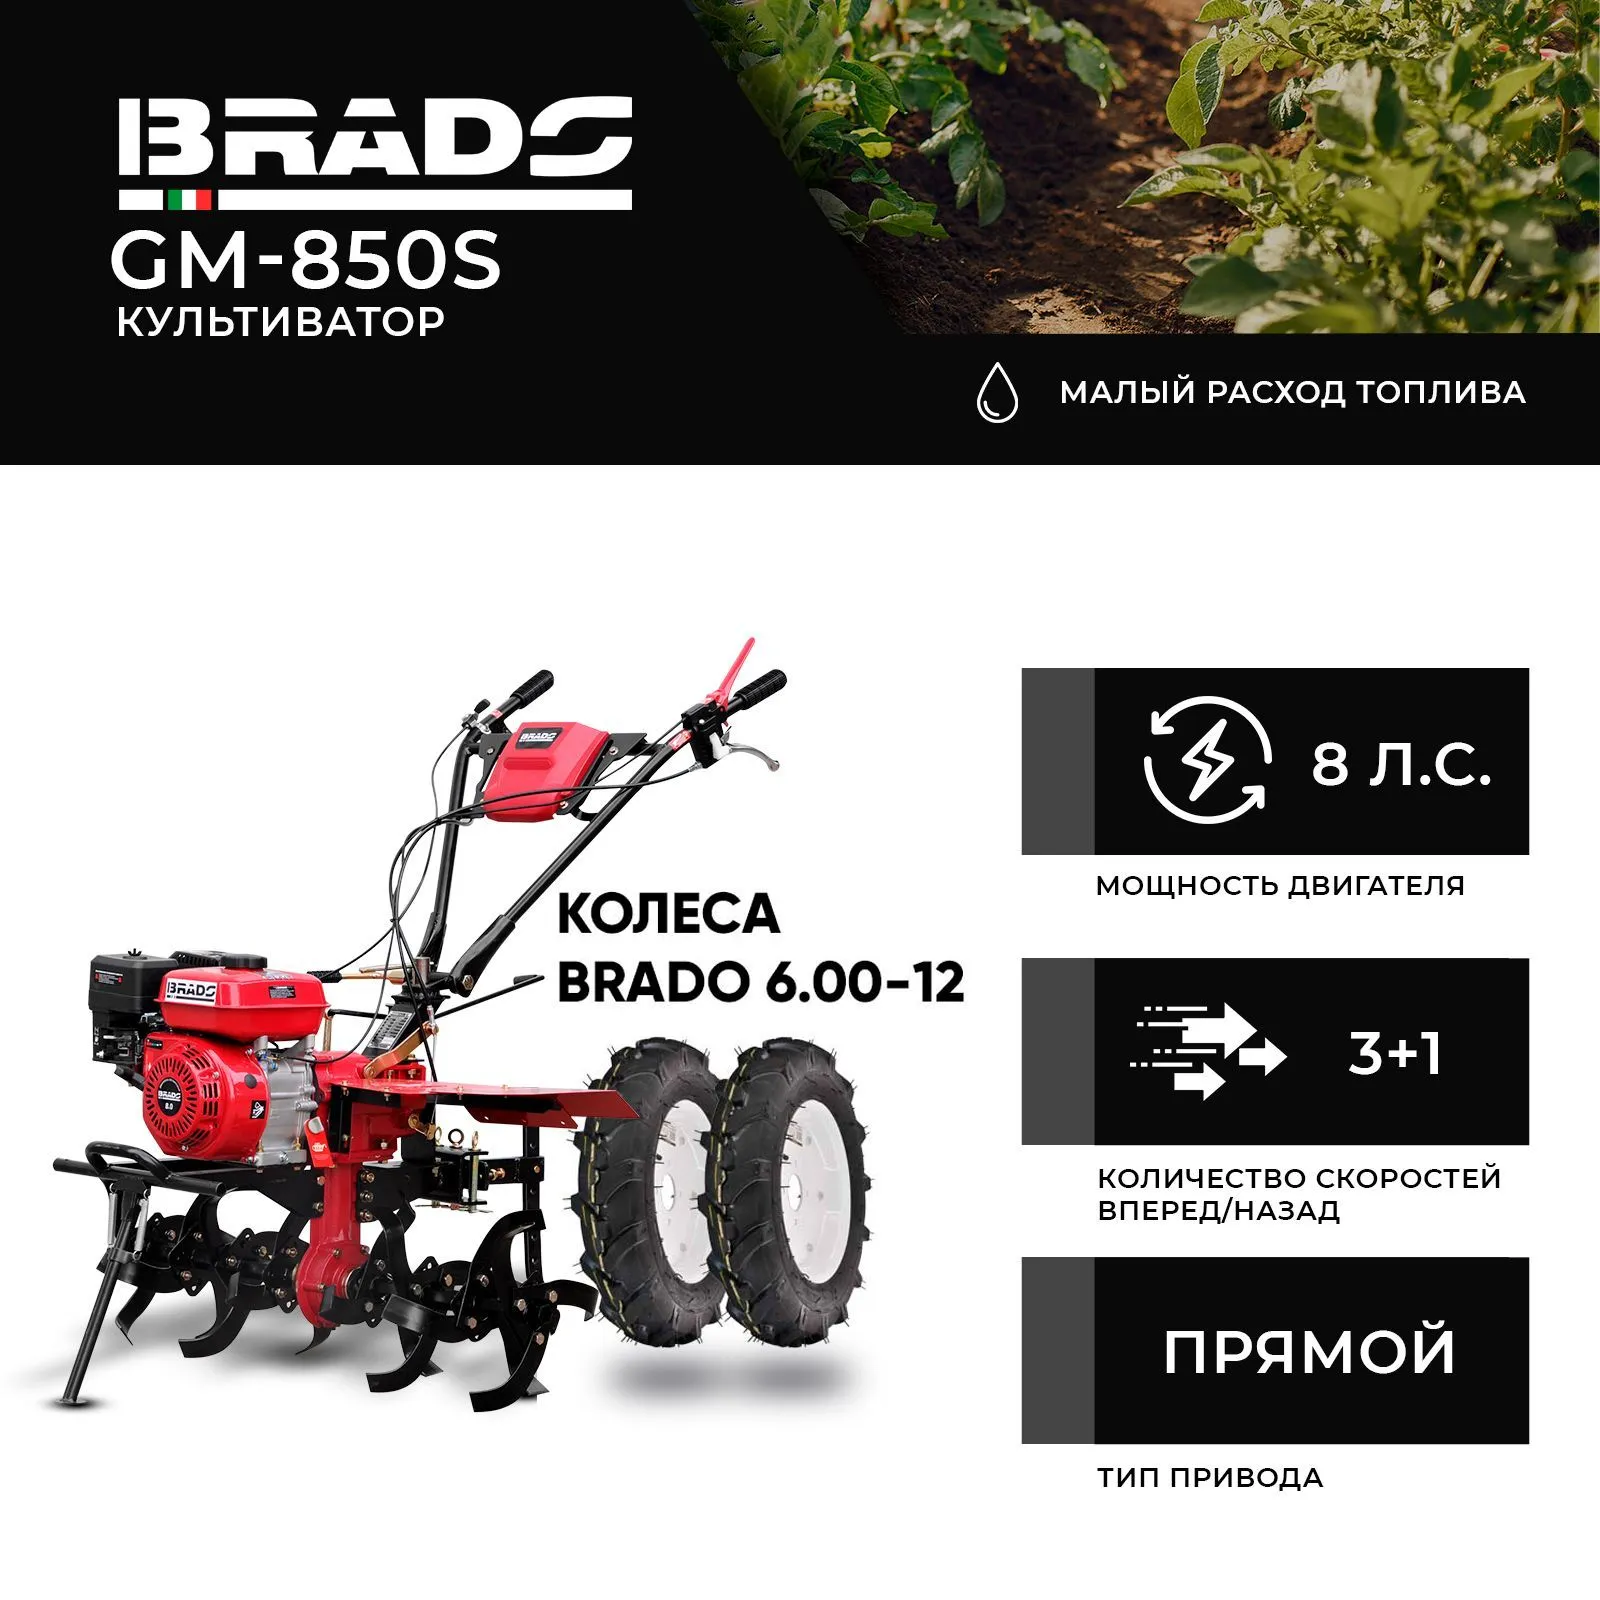 Brado GM-850S + колеса Brado 6.00-12 (2000290900019)